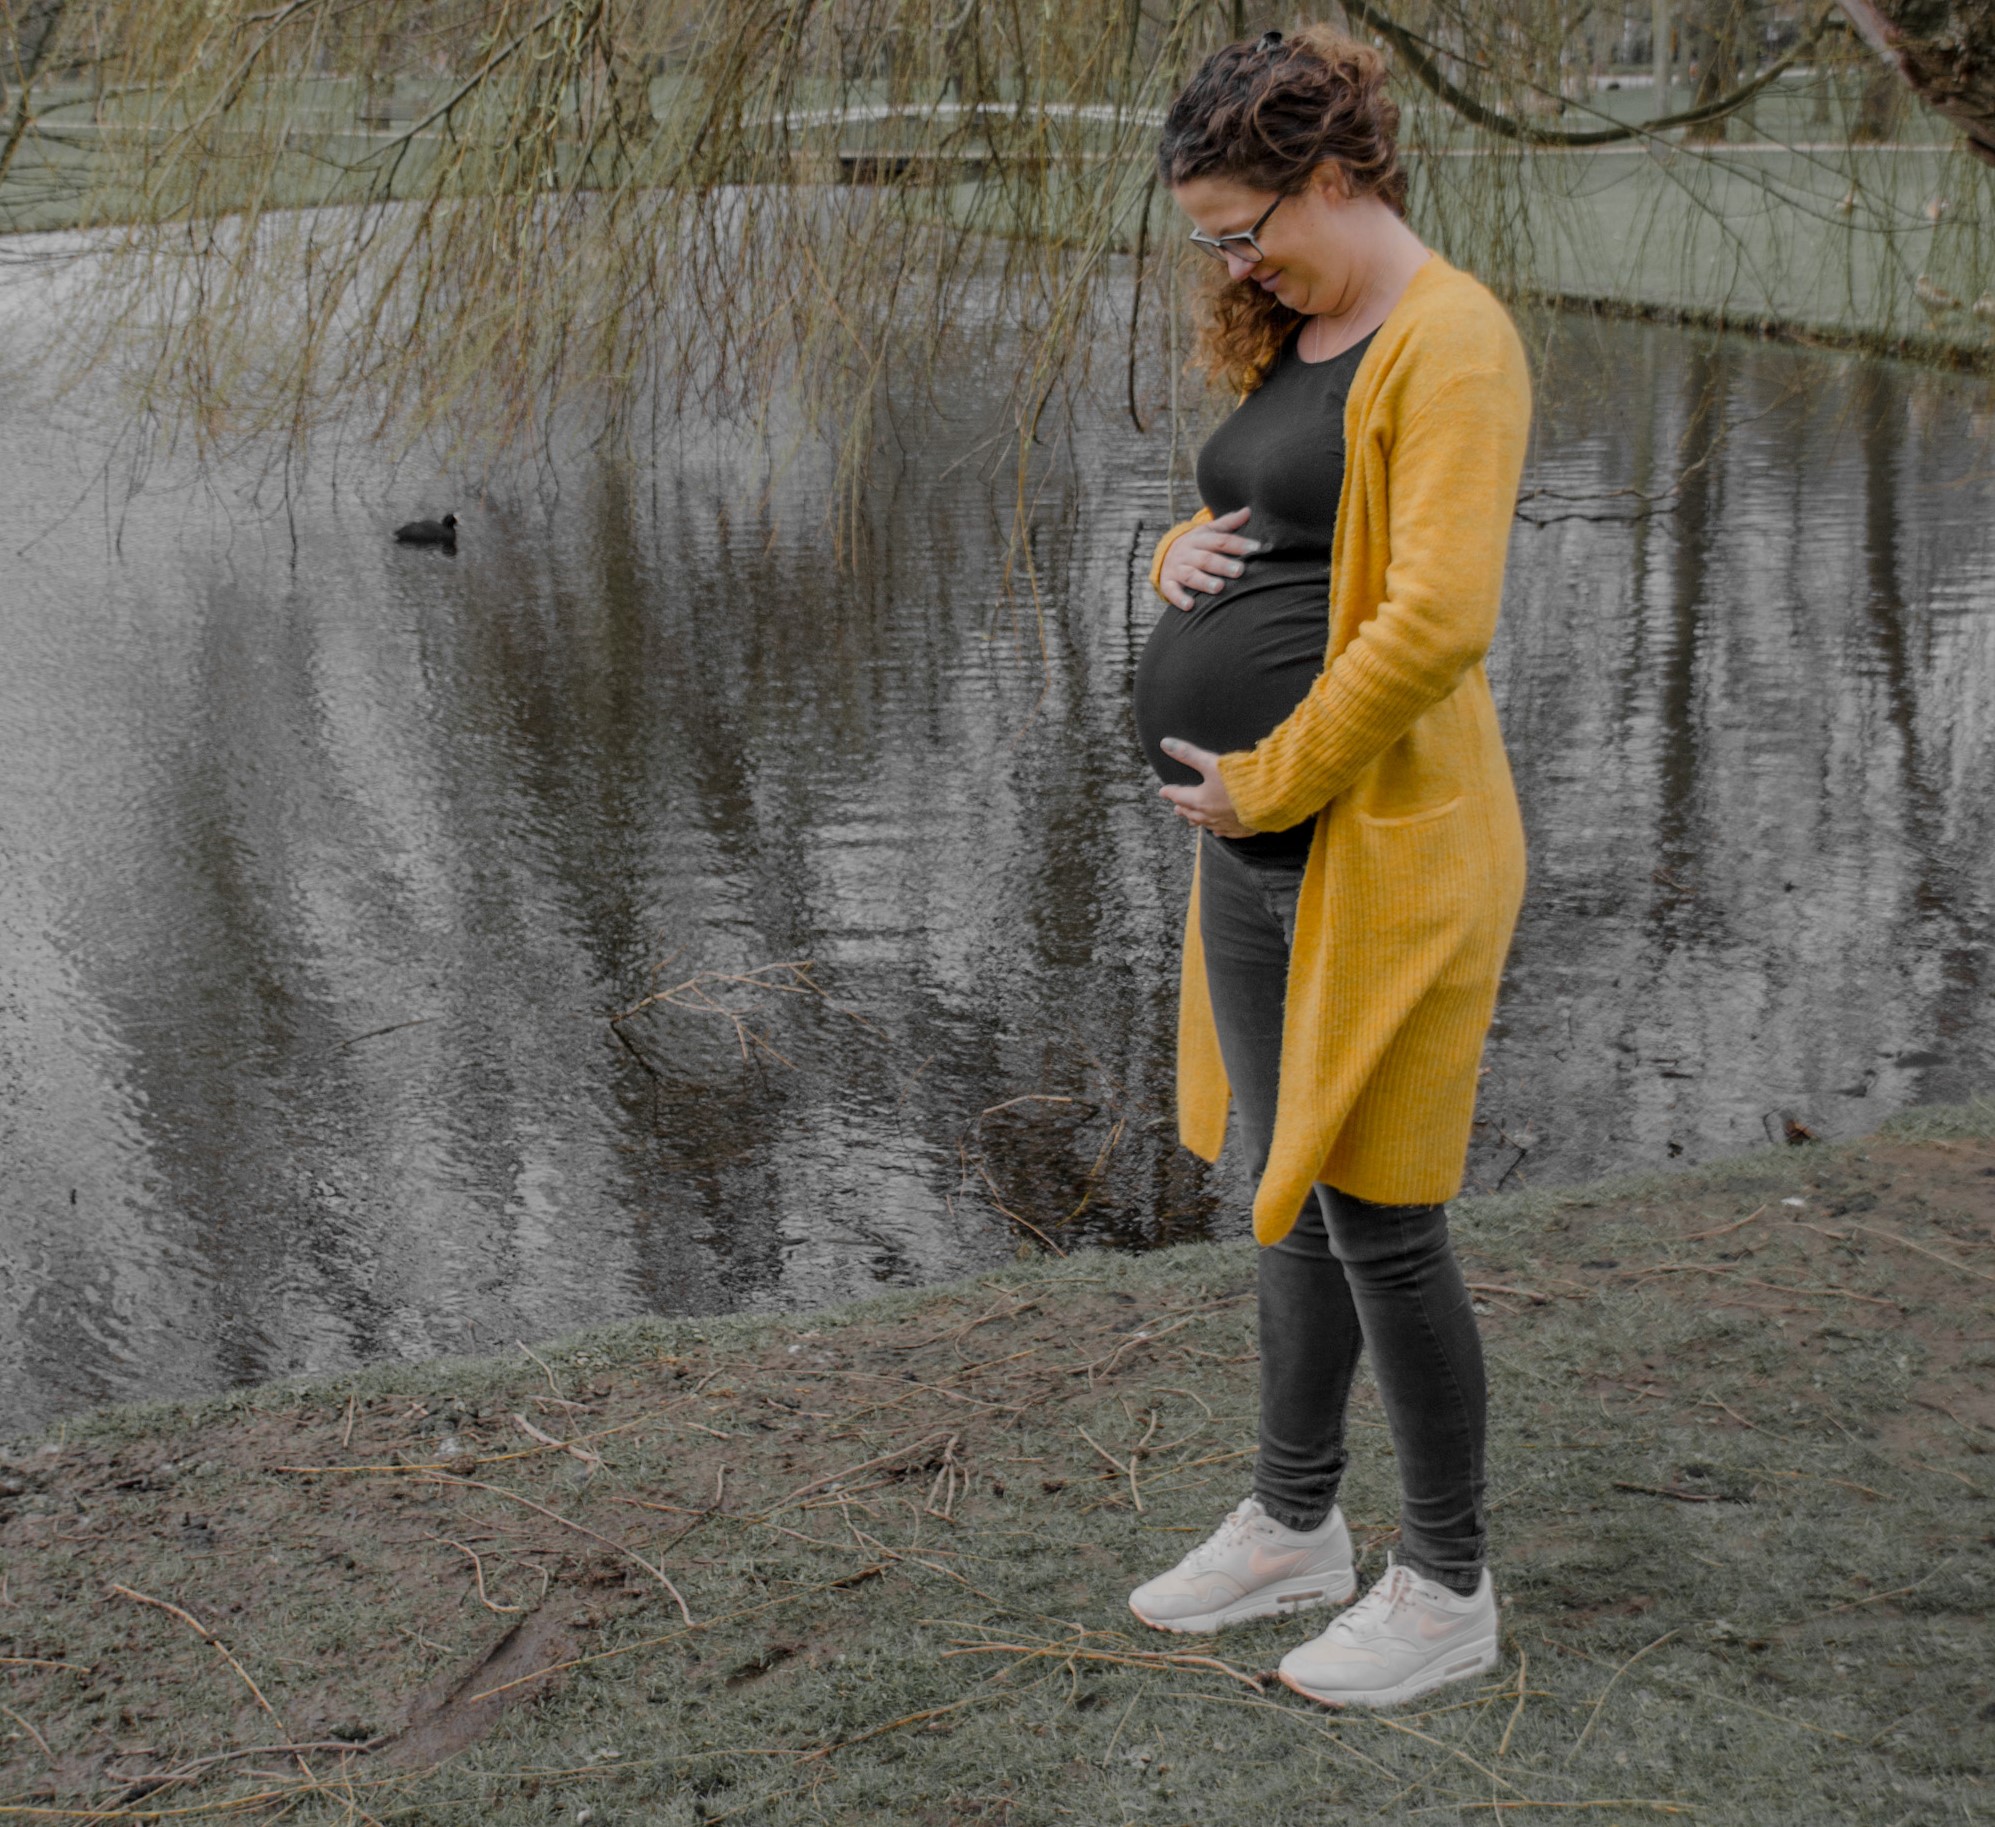 Zwanger: de mentale impact